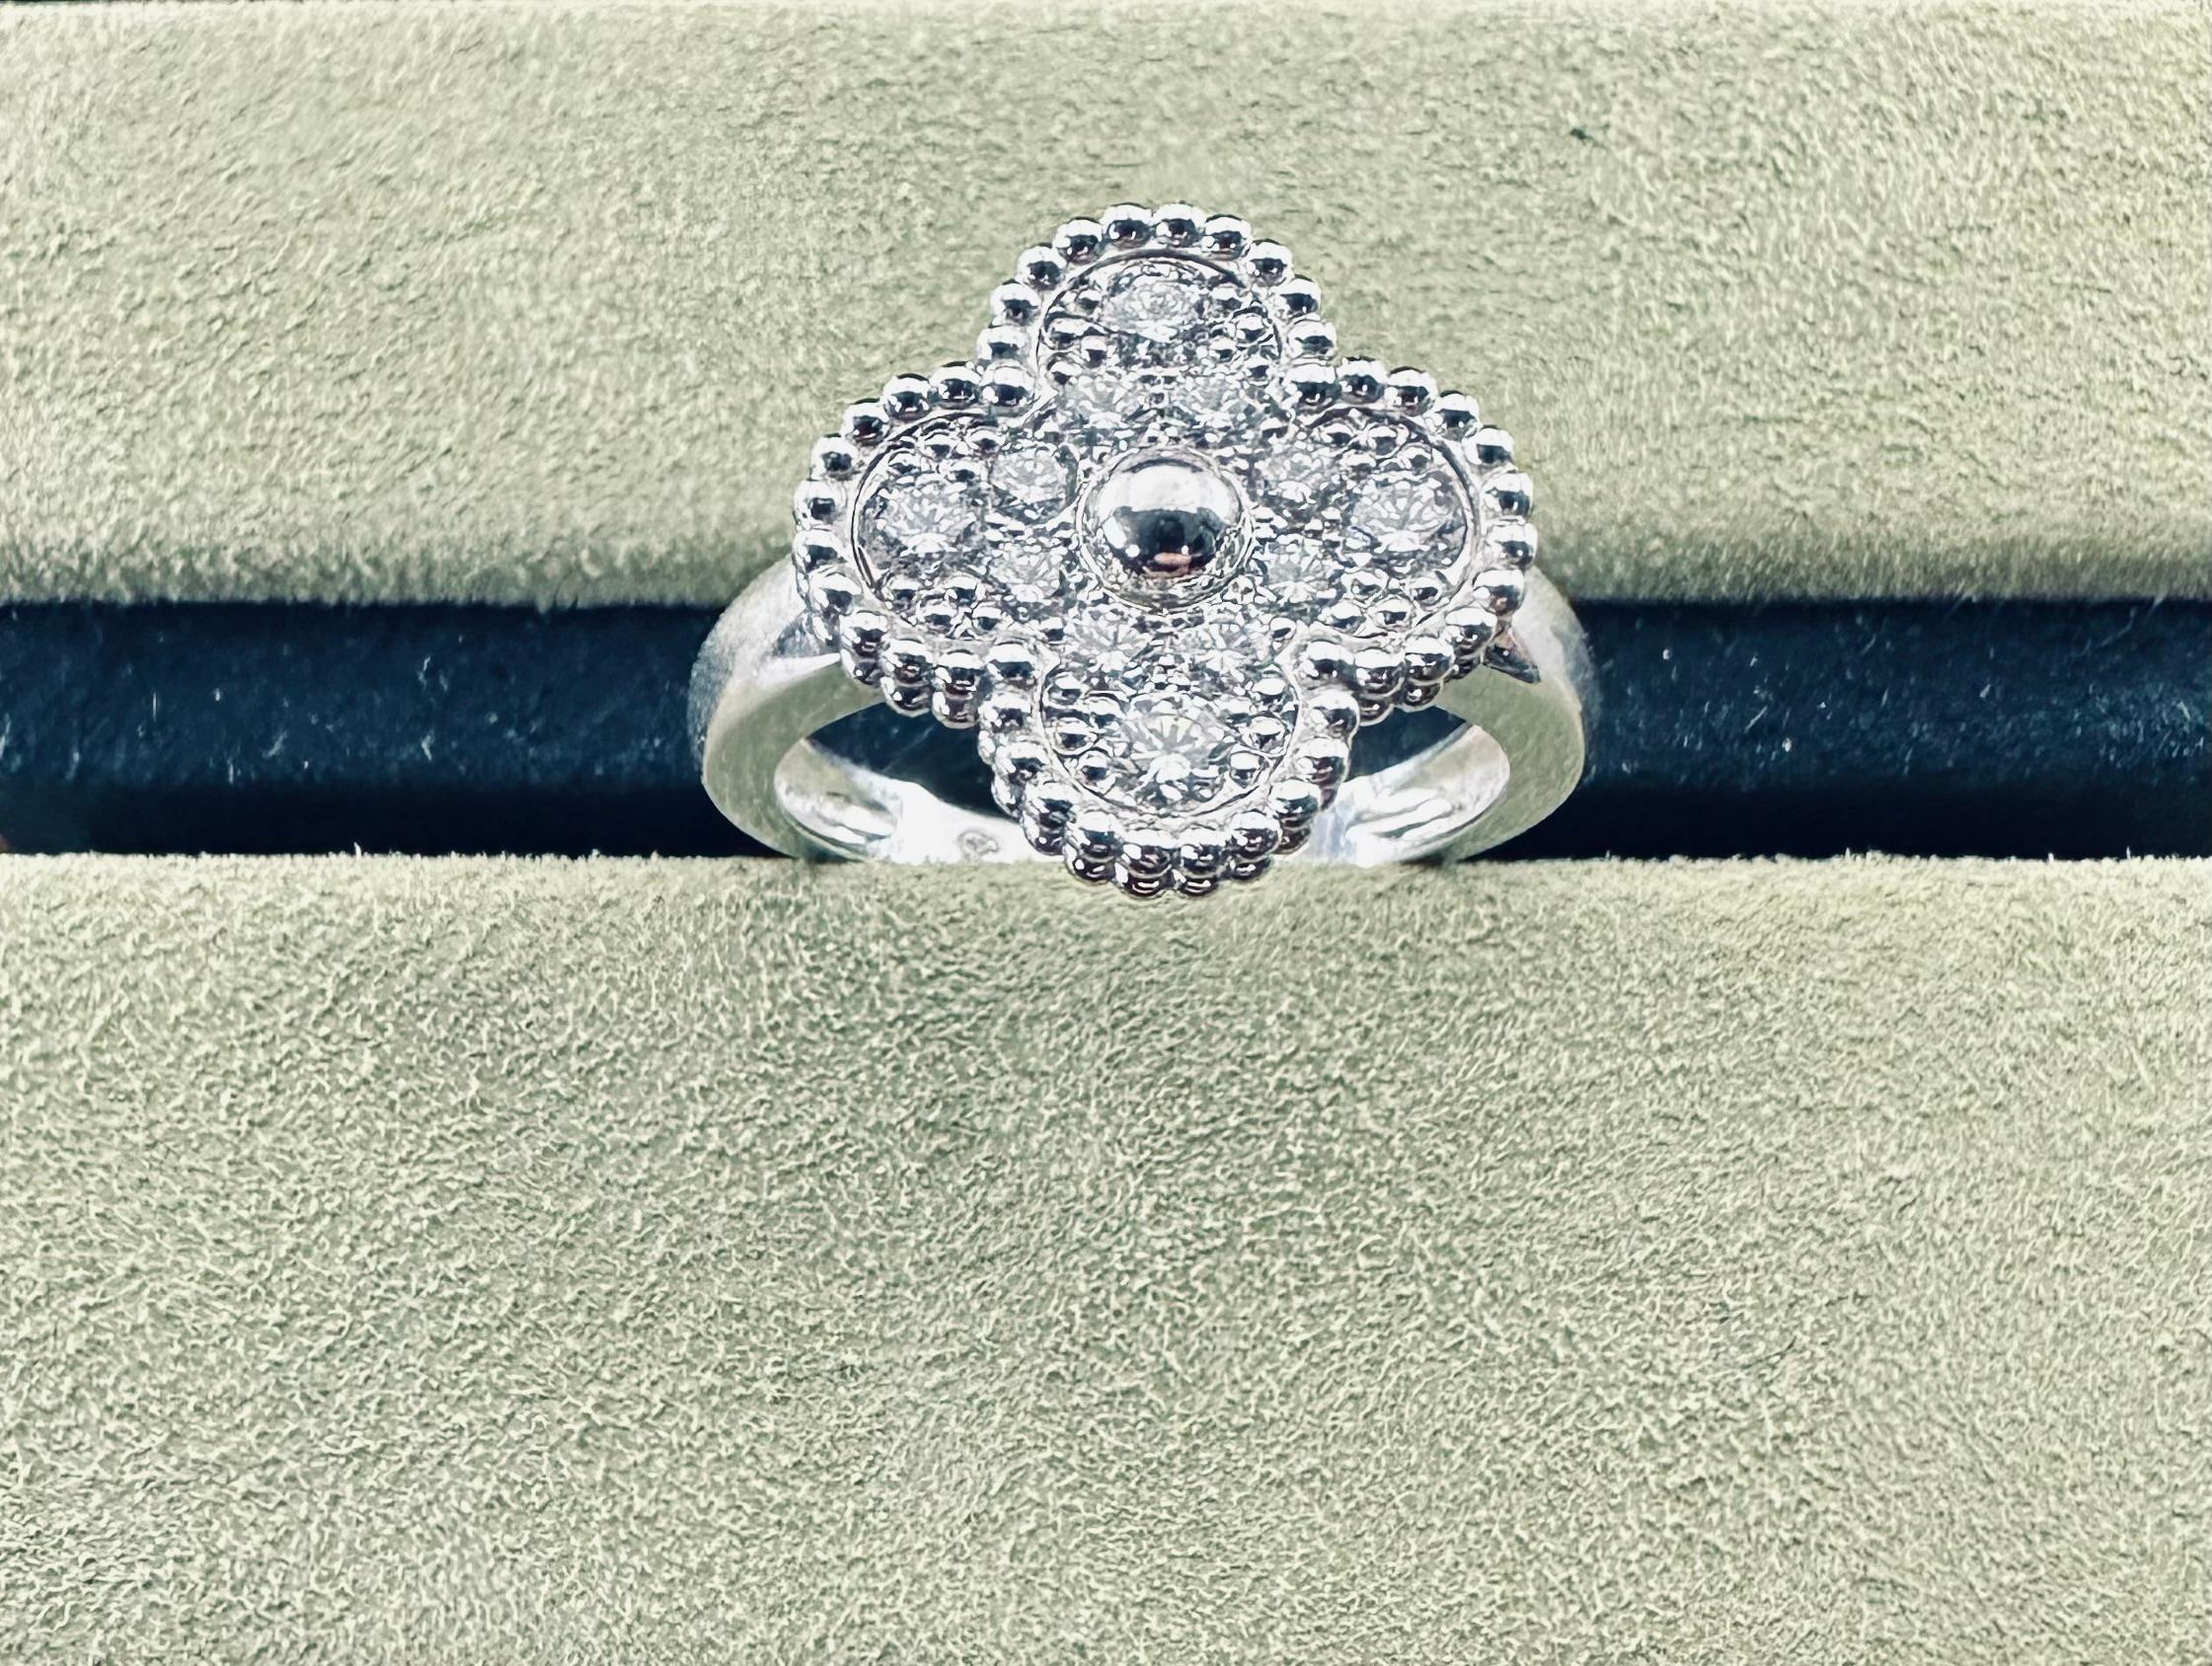 Vintage Alhambra ring, rhodium plated 18K white gold, round diamonds; diamond quality DEF, IF to VVS.
12 Round Brilliant Cut .48 cts
18k White Gold 
size 54
